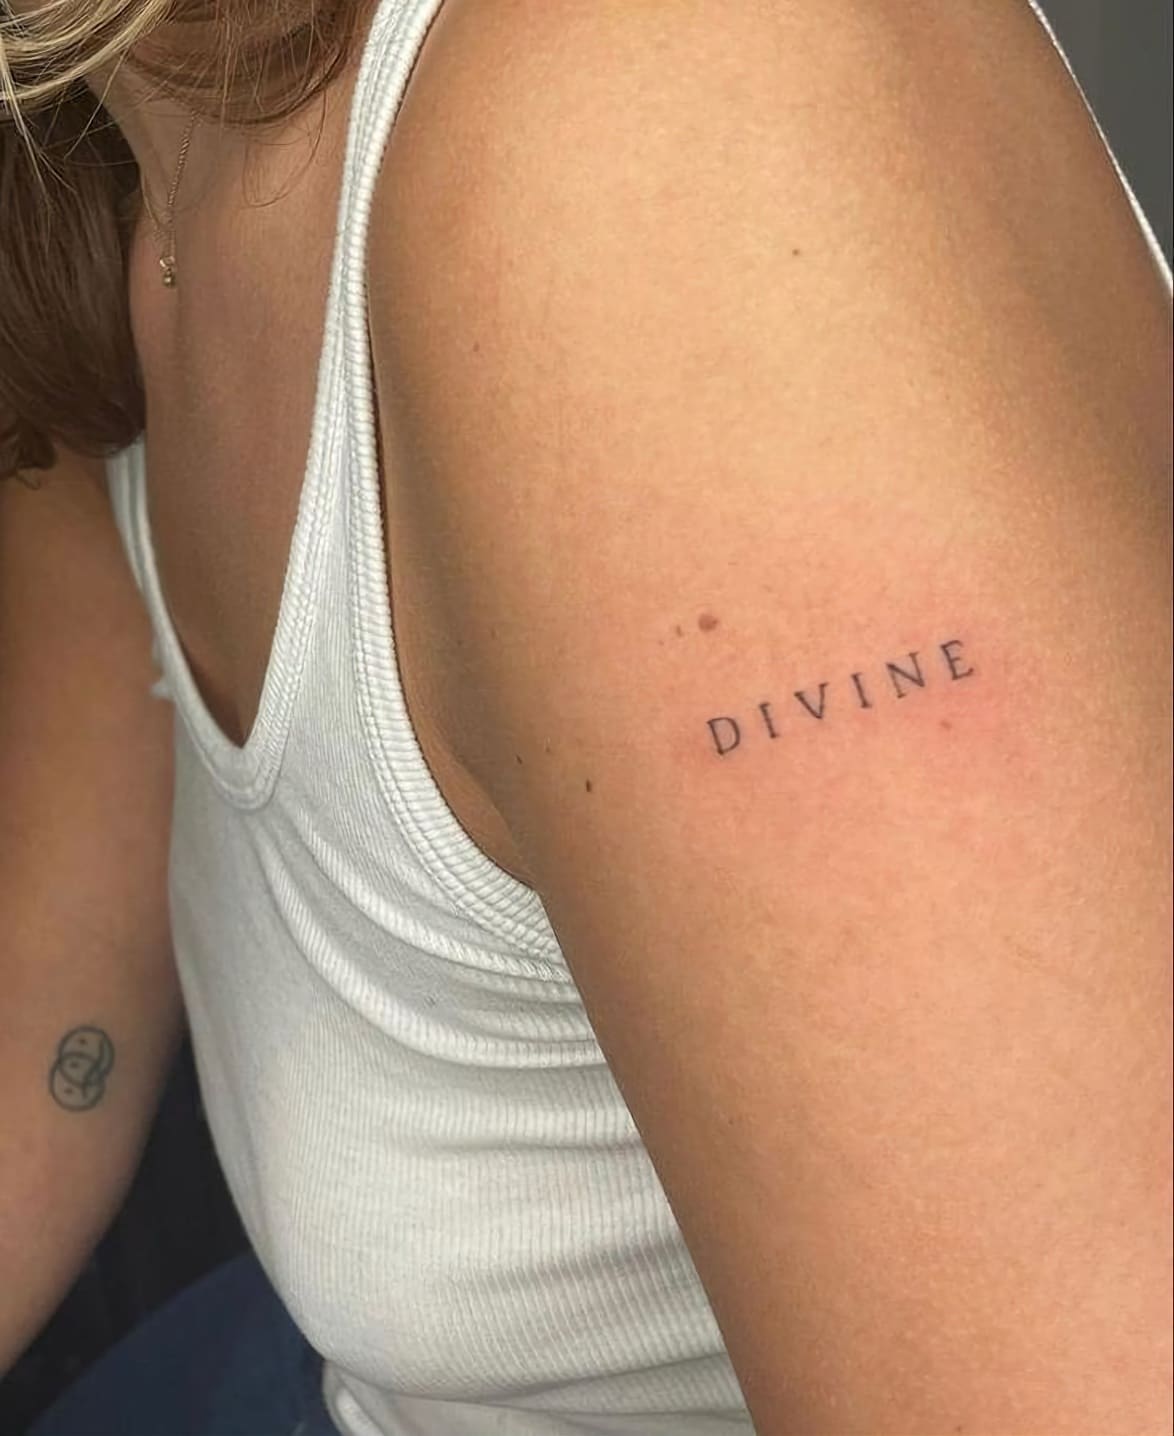 Palabras para tatuarse - Divine